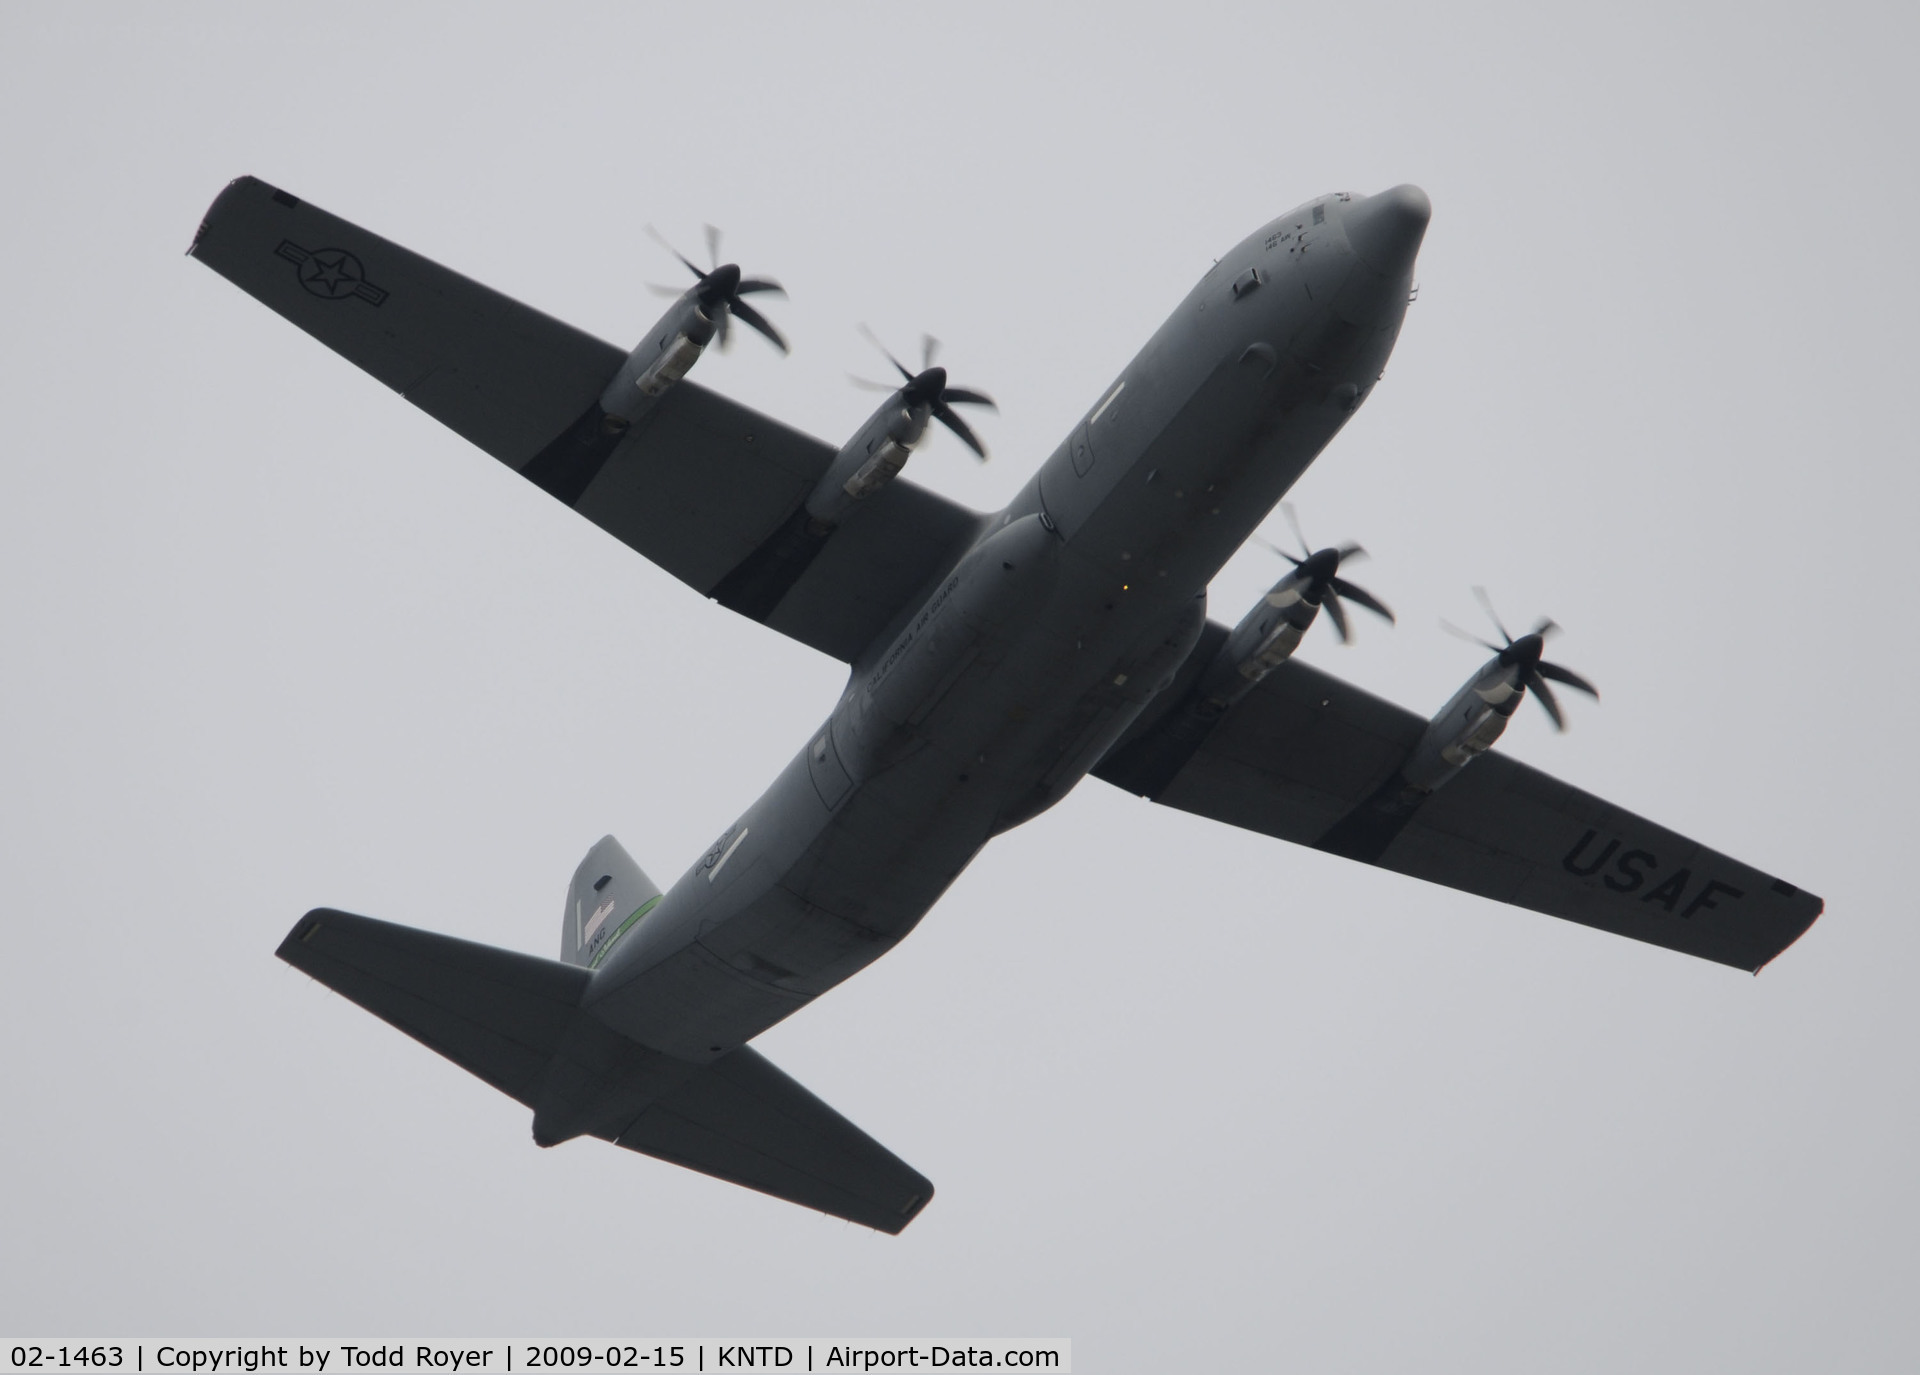 02-1463, 2003 Lockheed Martin C-130J-30 Super Hercules C/N 382-5551, From the backyard